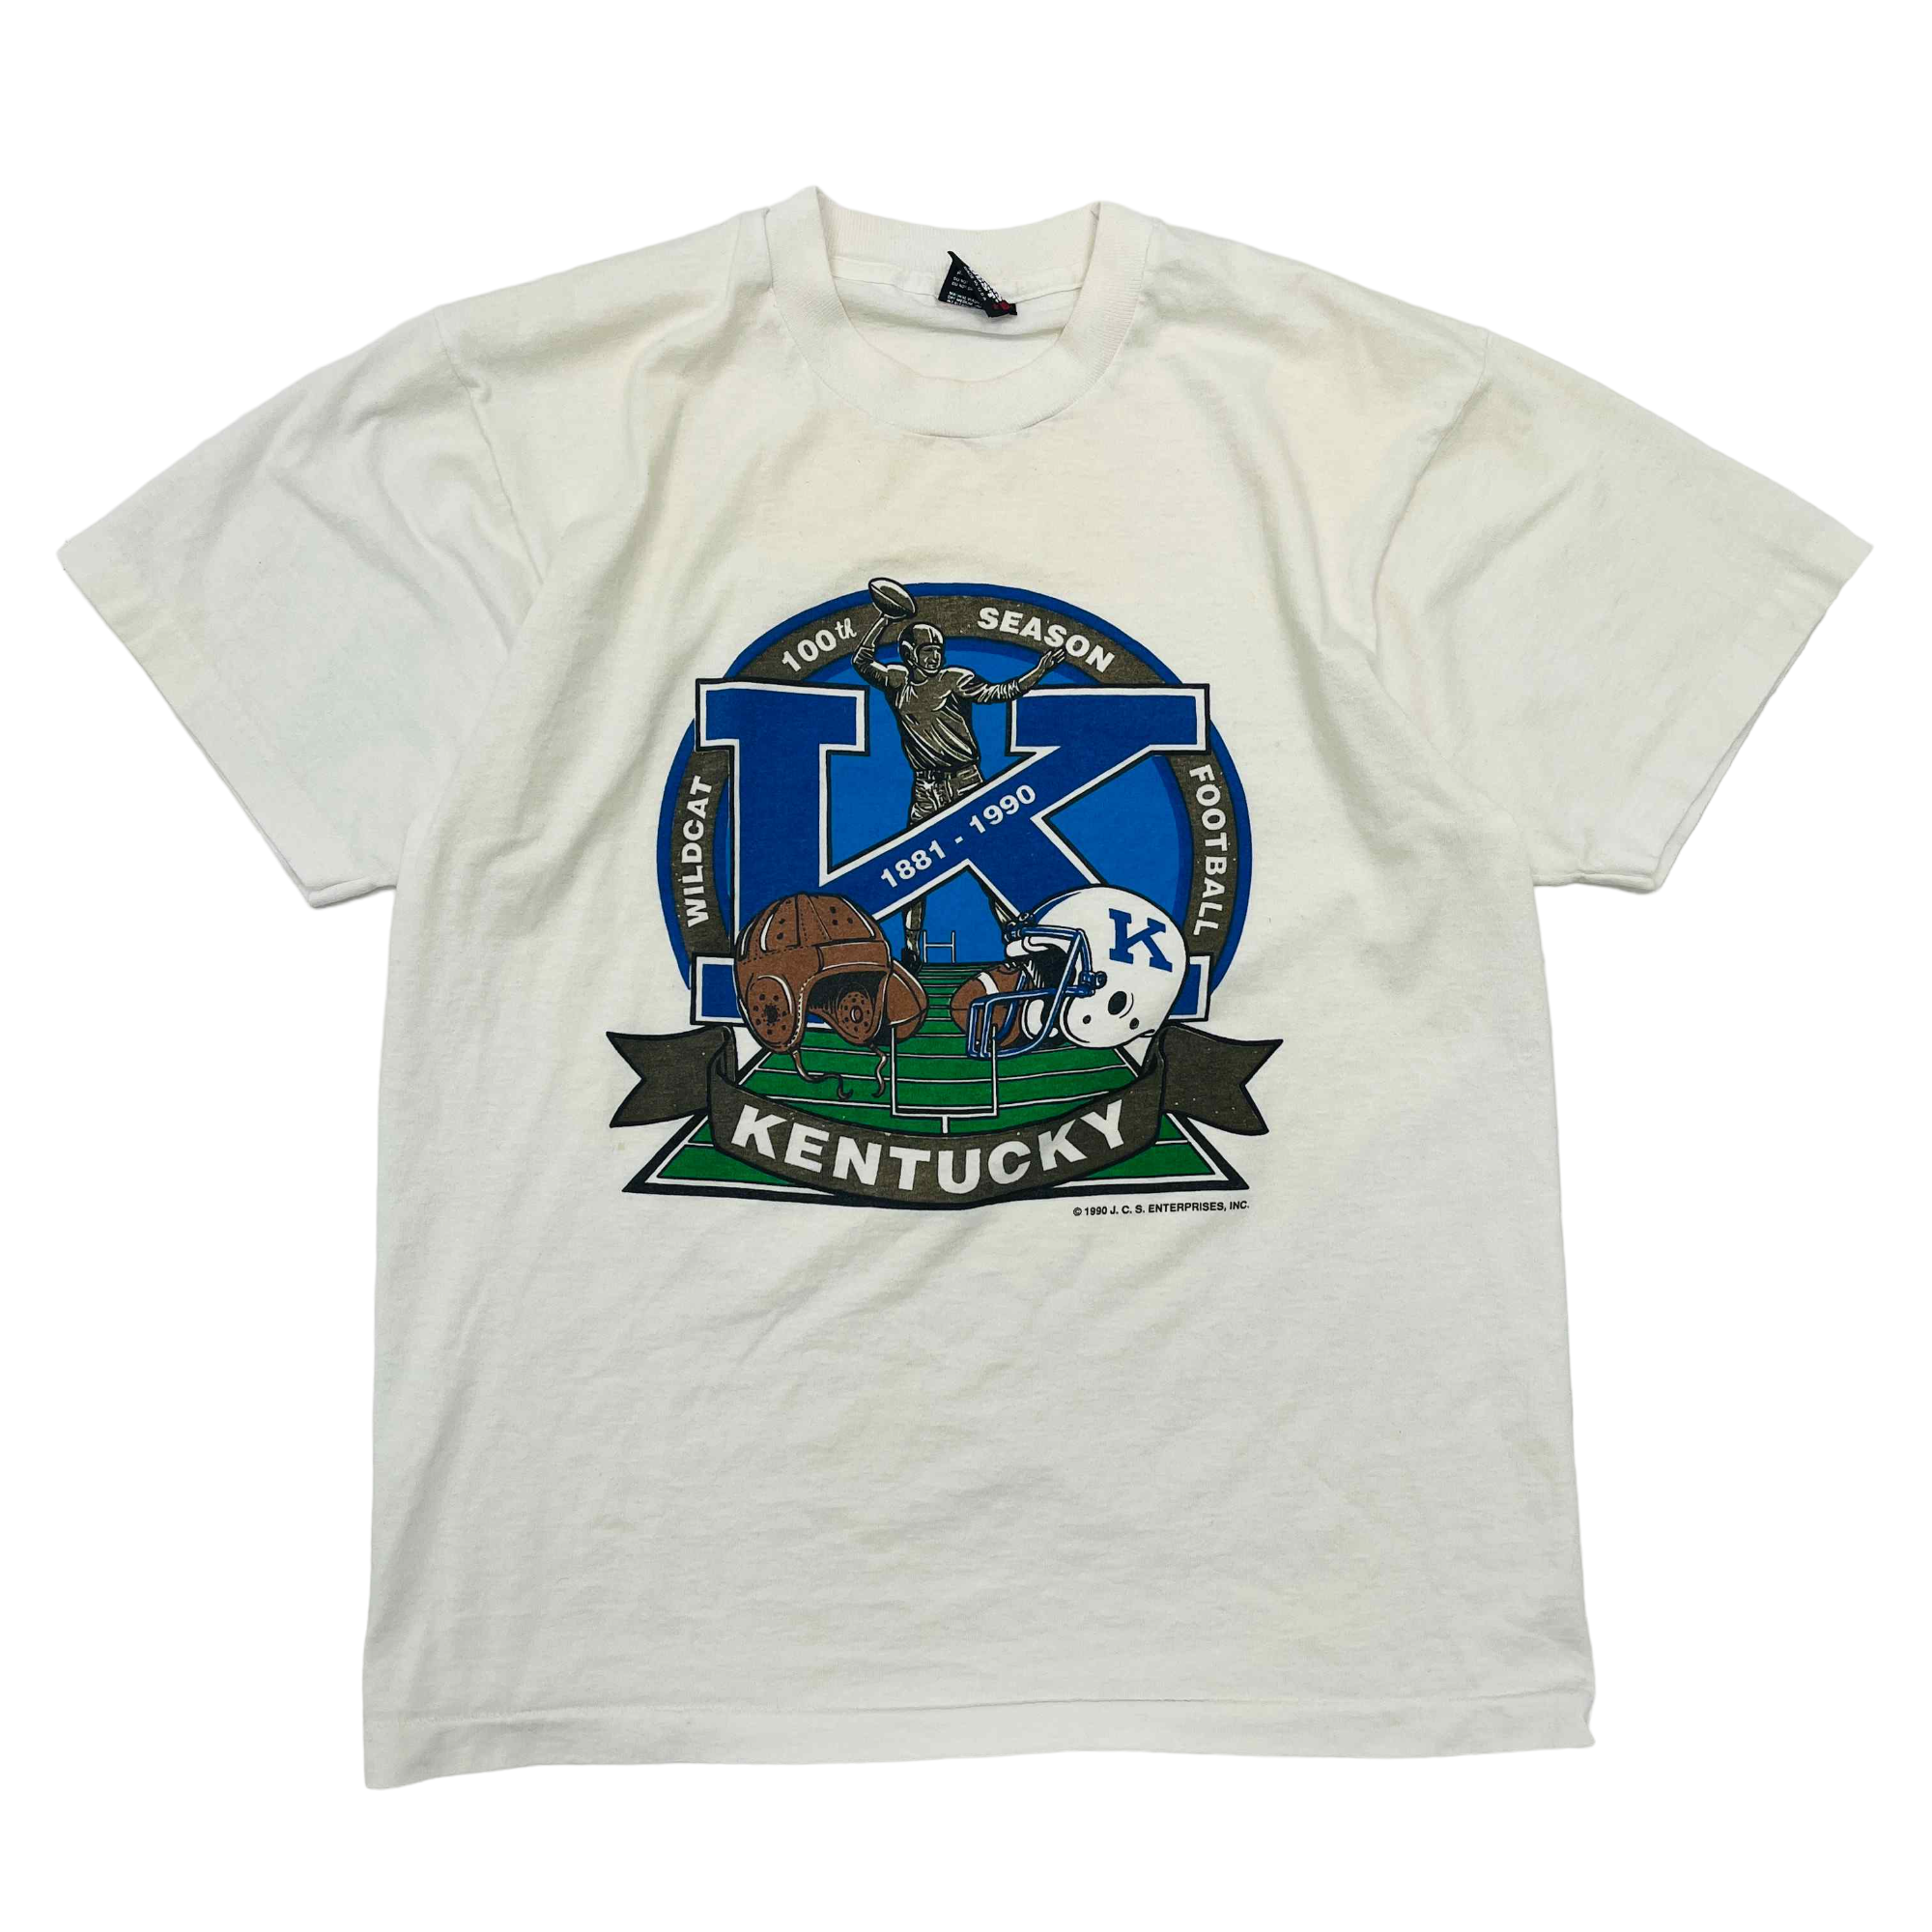 1990 Kentucky Wildcats 100th Season T-Shirt - Large